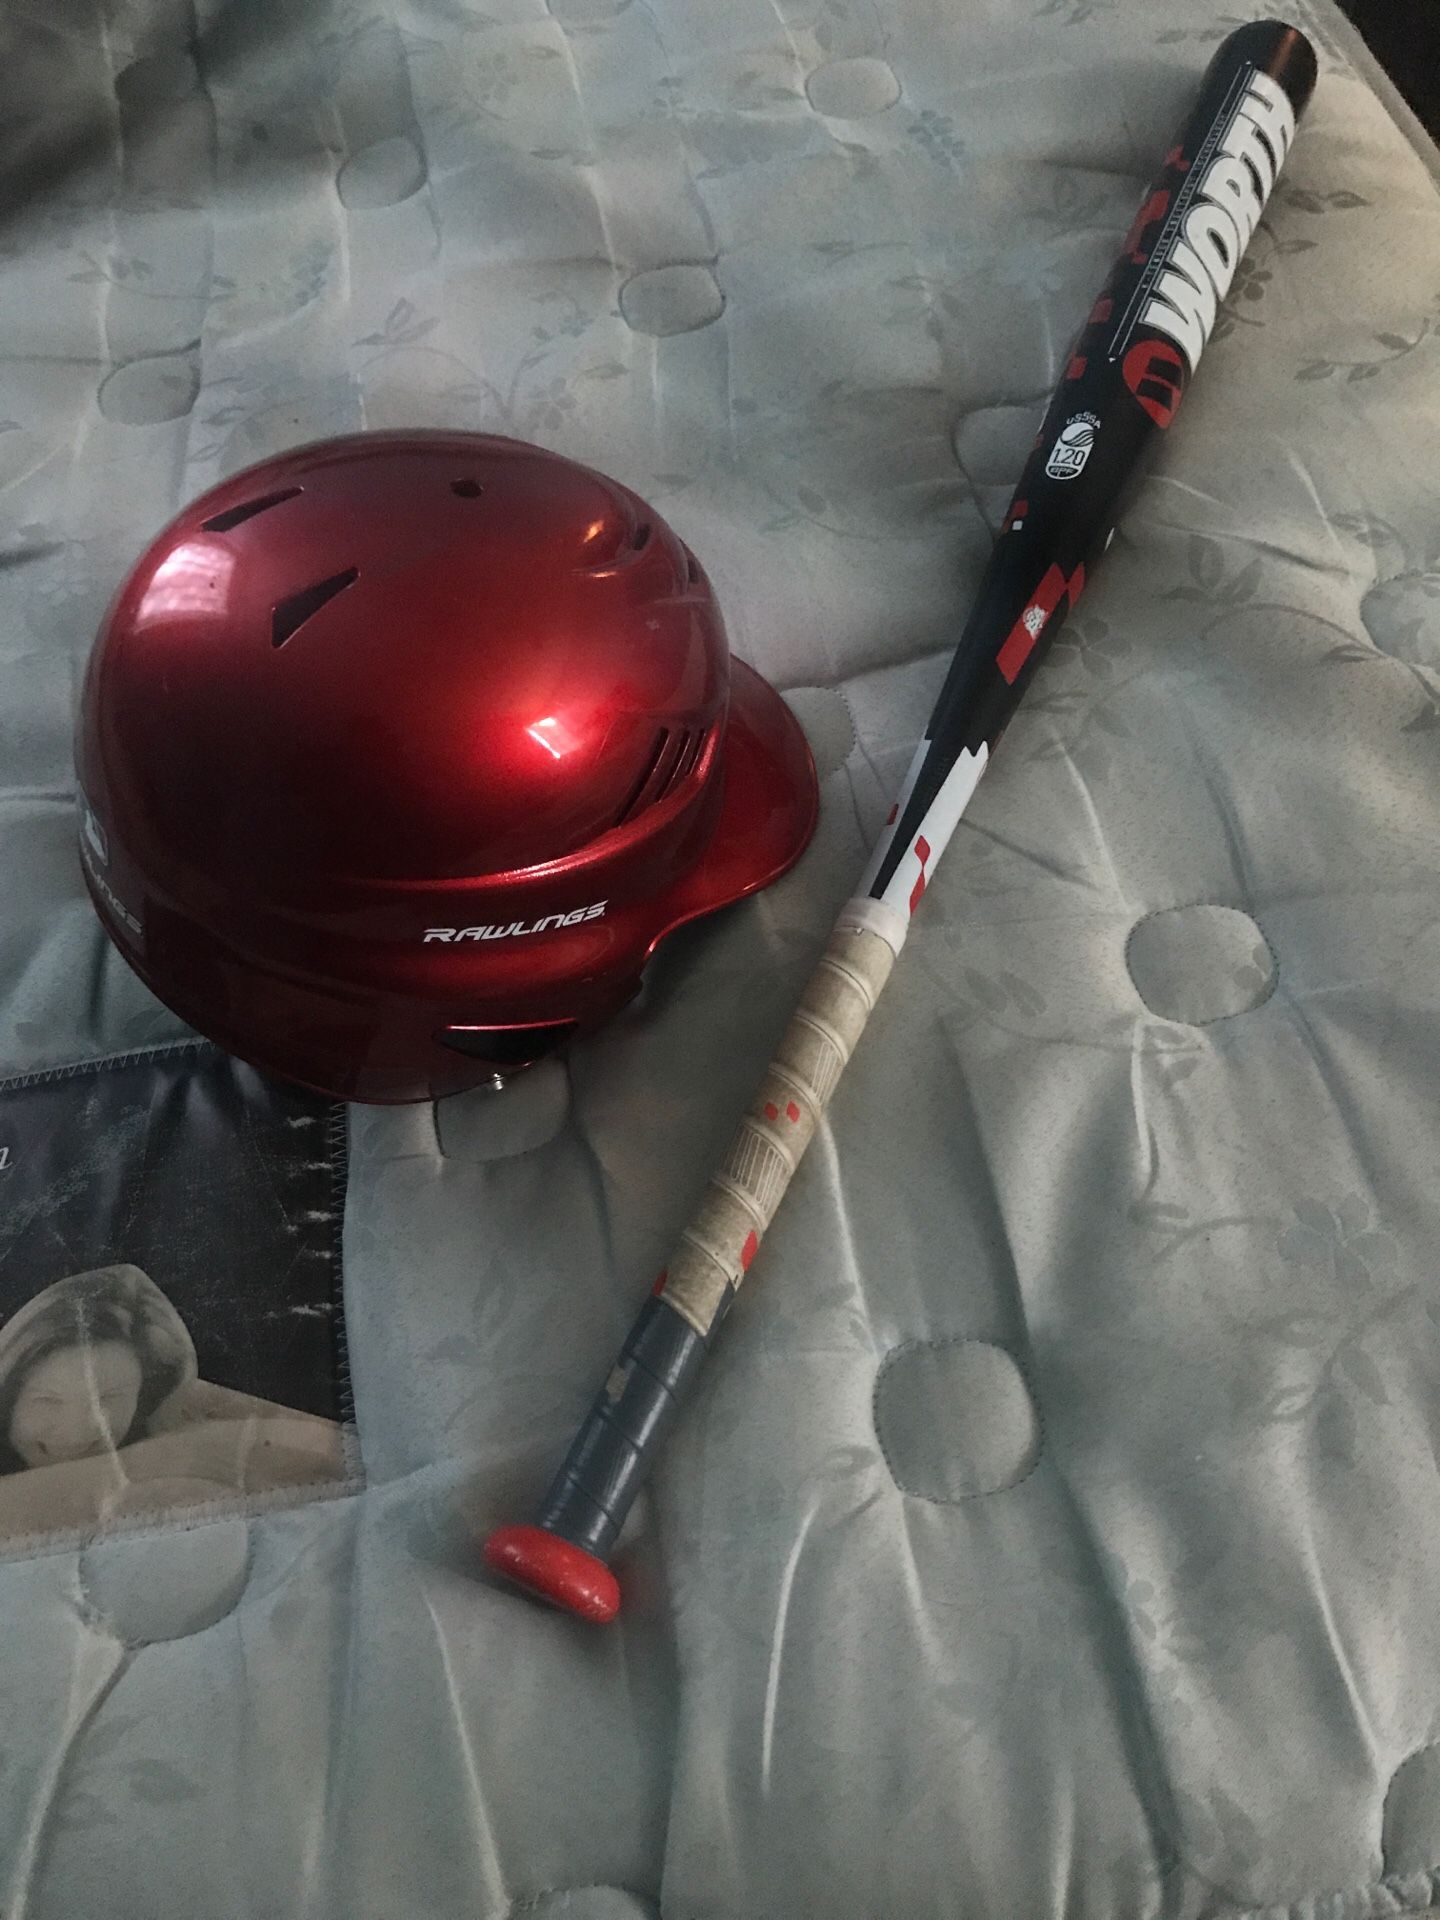 Baseball helmet and bat